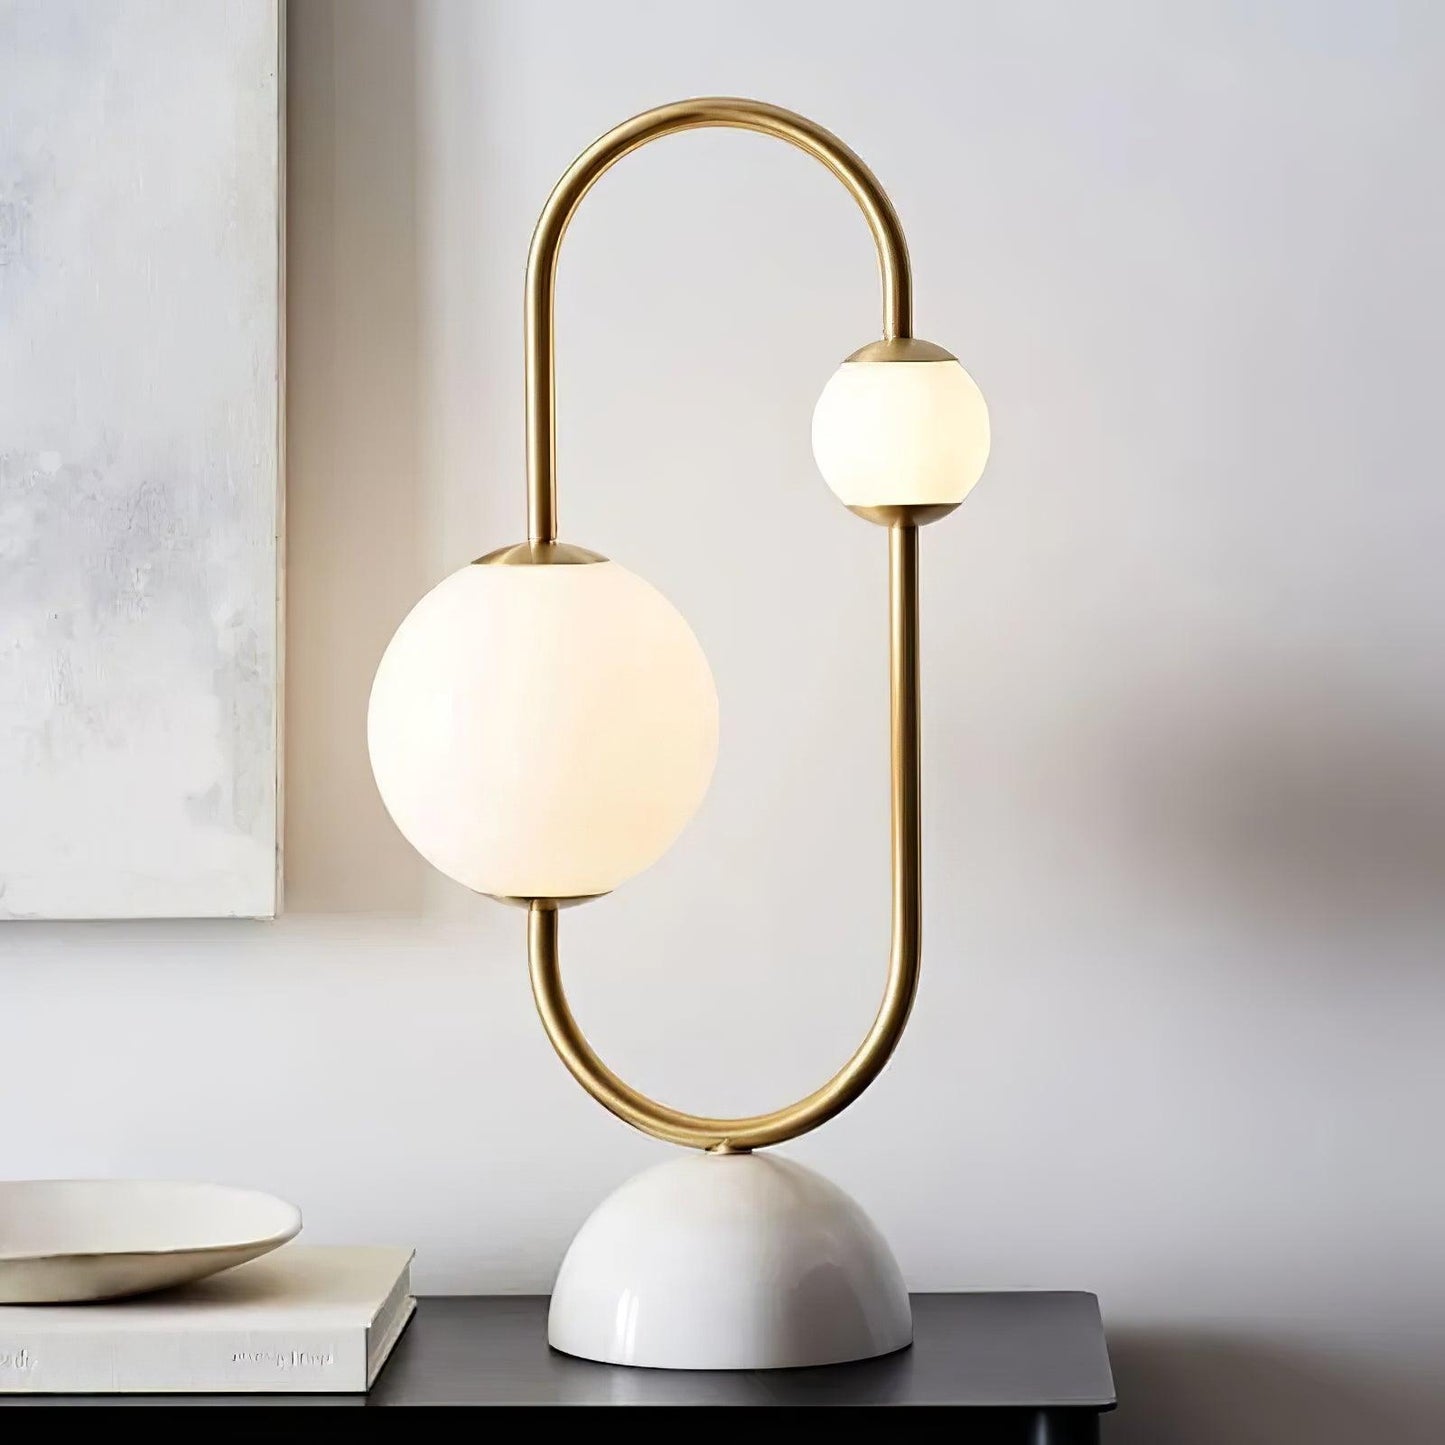 Martha Table Lamp